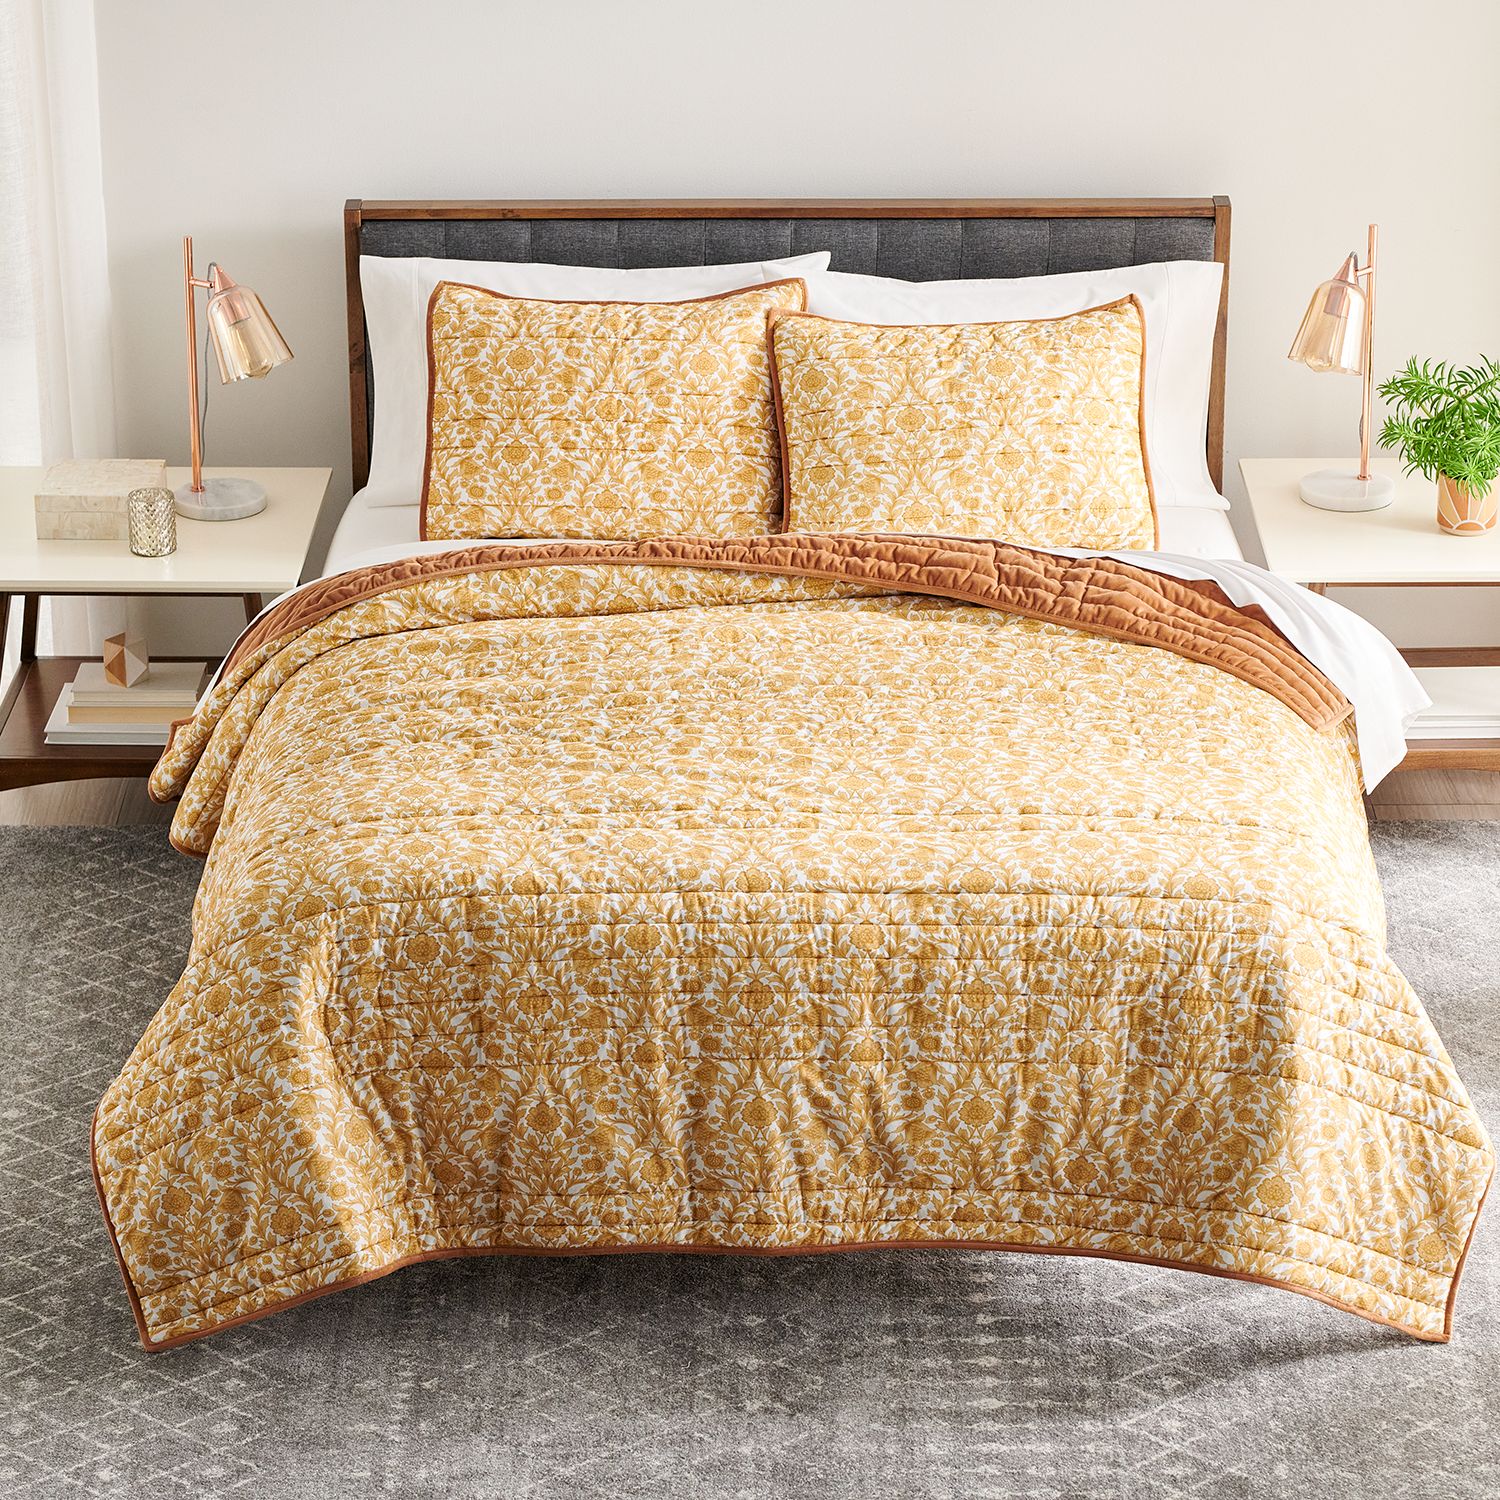 5 Essential Fall Bedding Styles